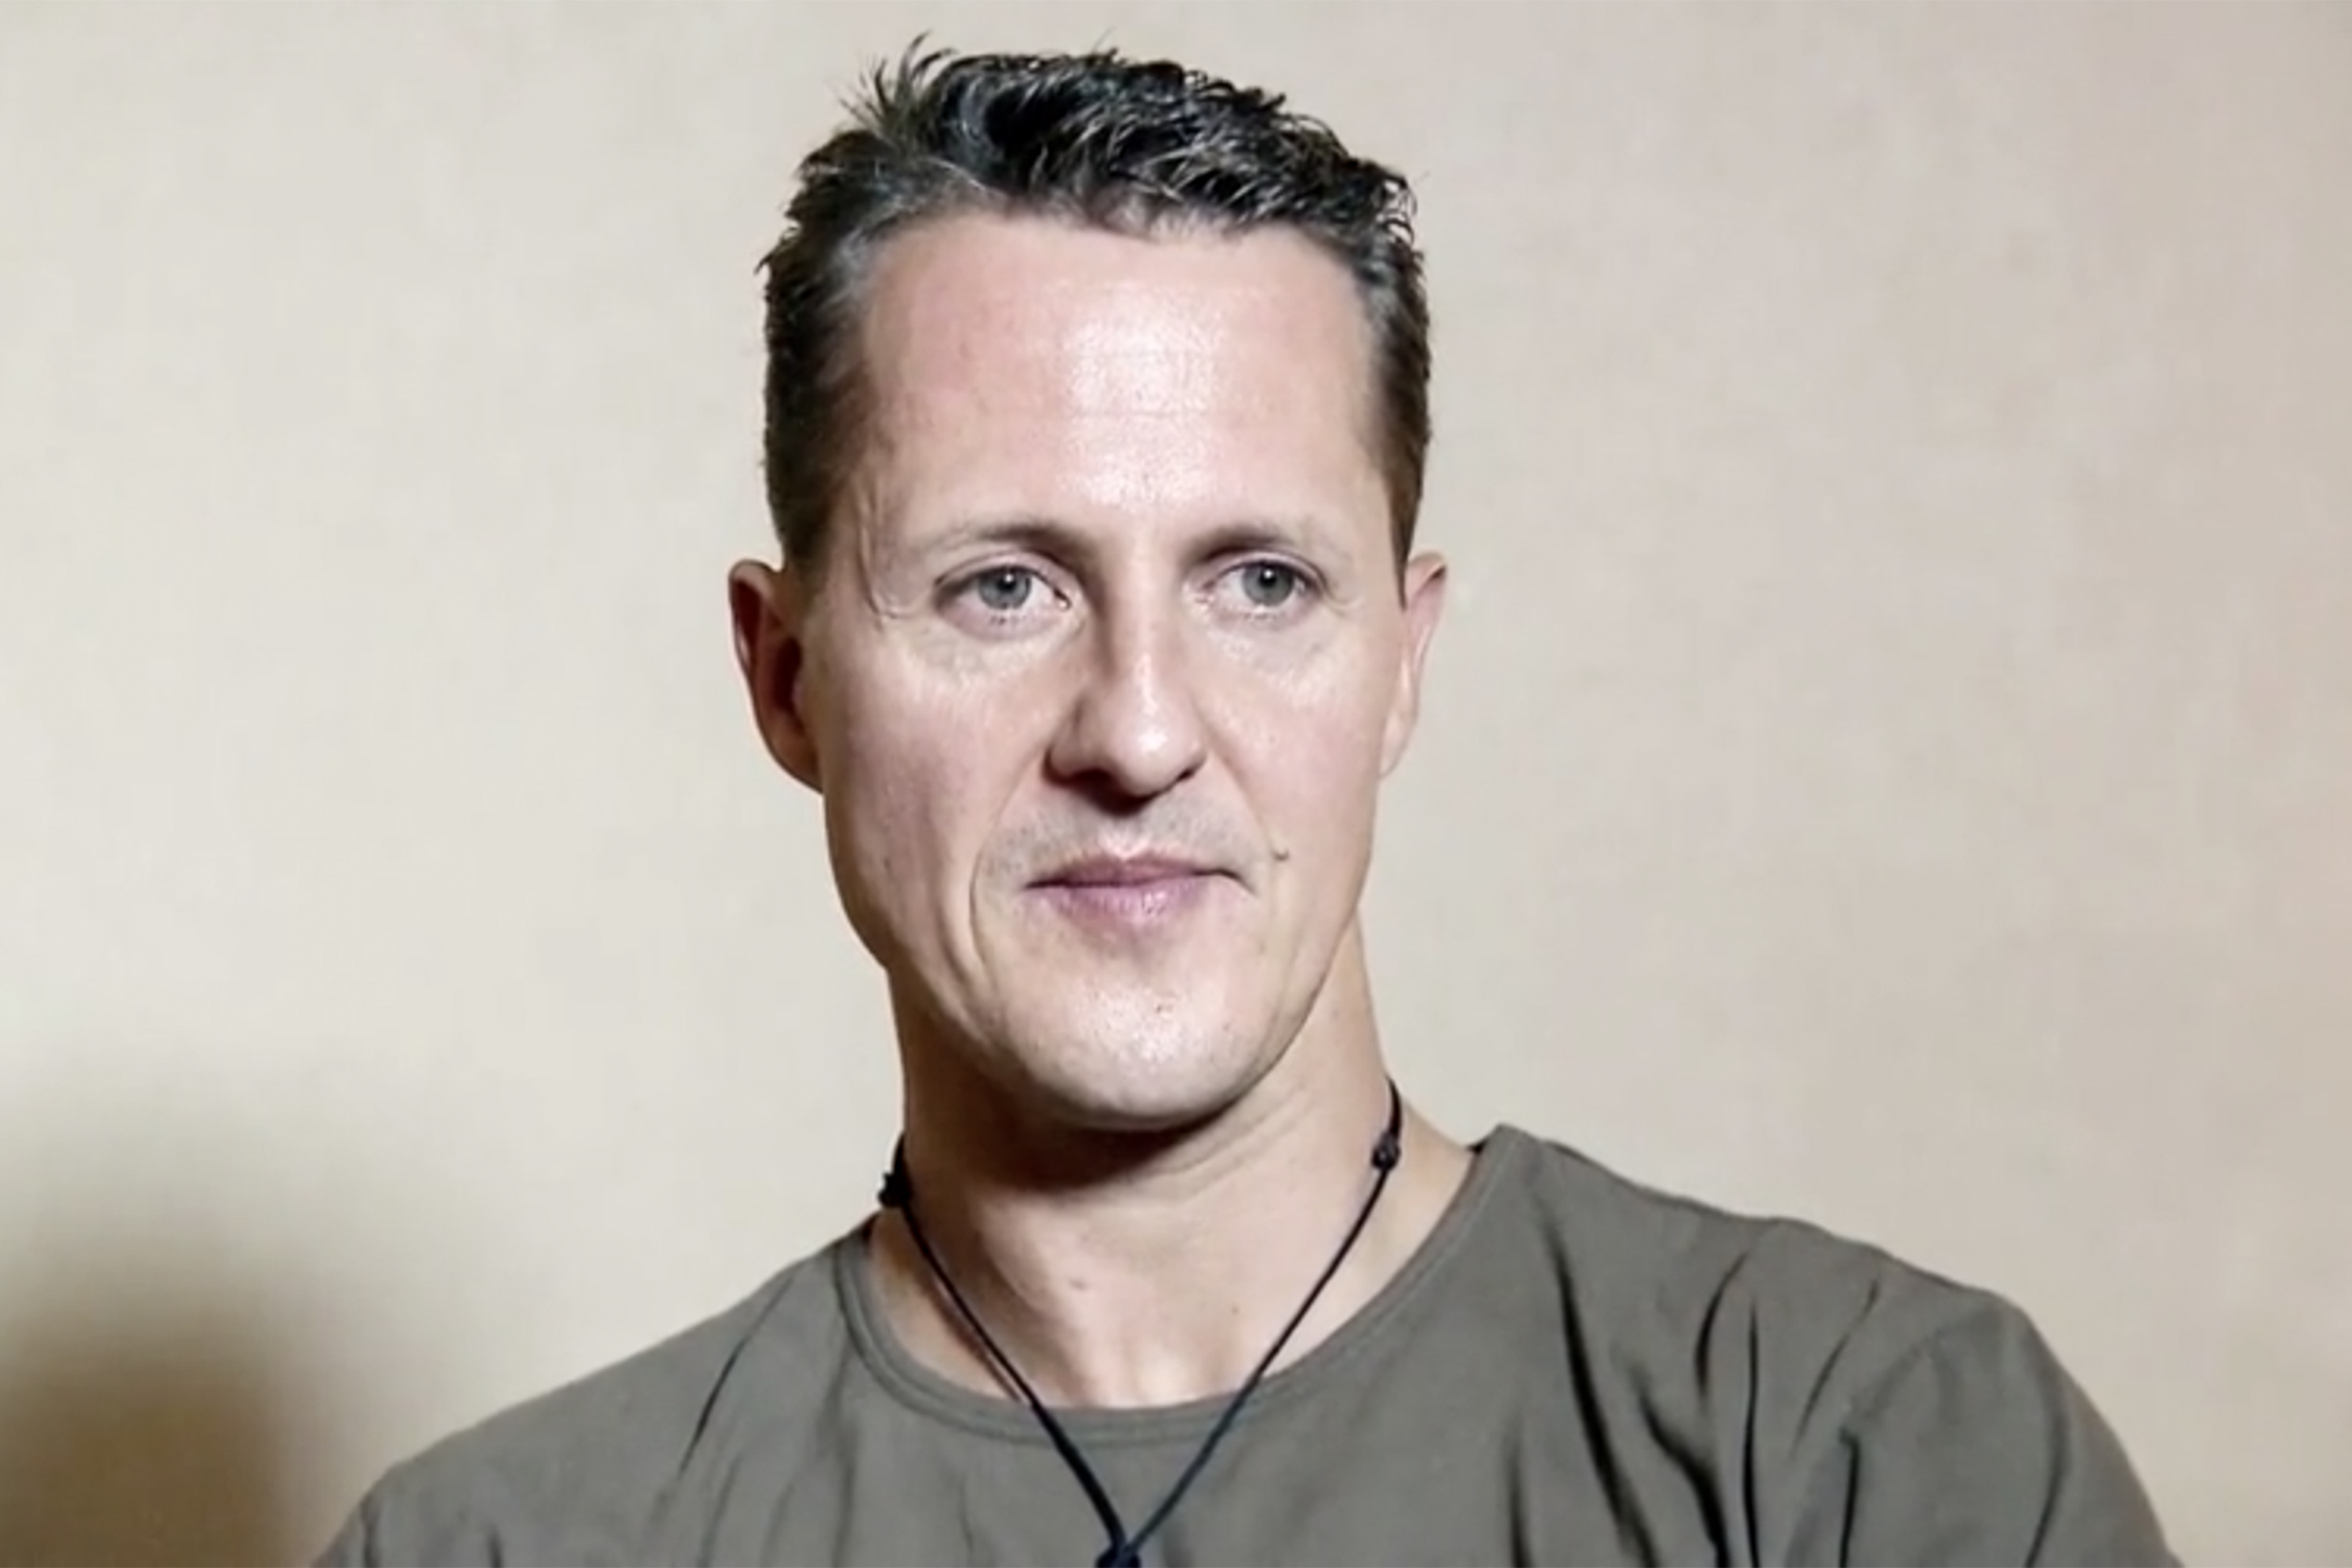 Michael Schumacher : l’ancienne star de Formule 1 attaquée par Benjamin Biolay